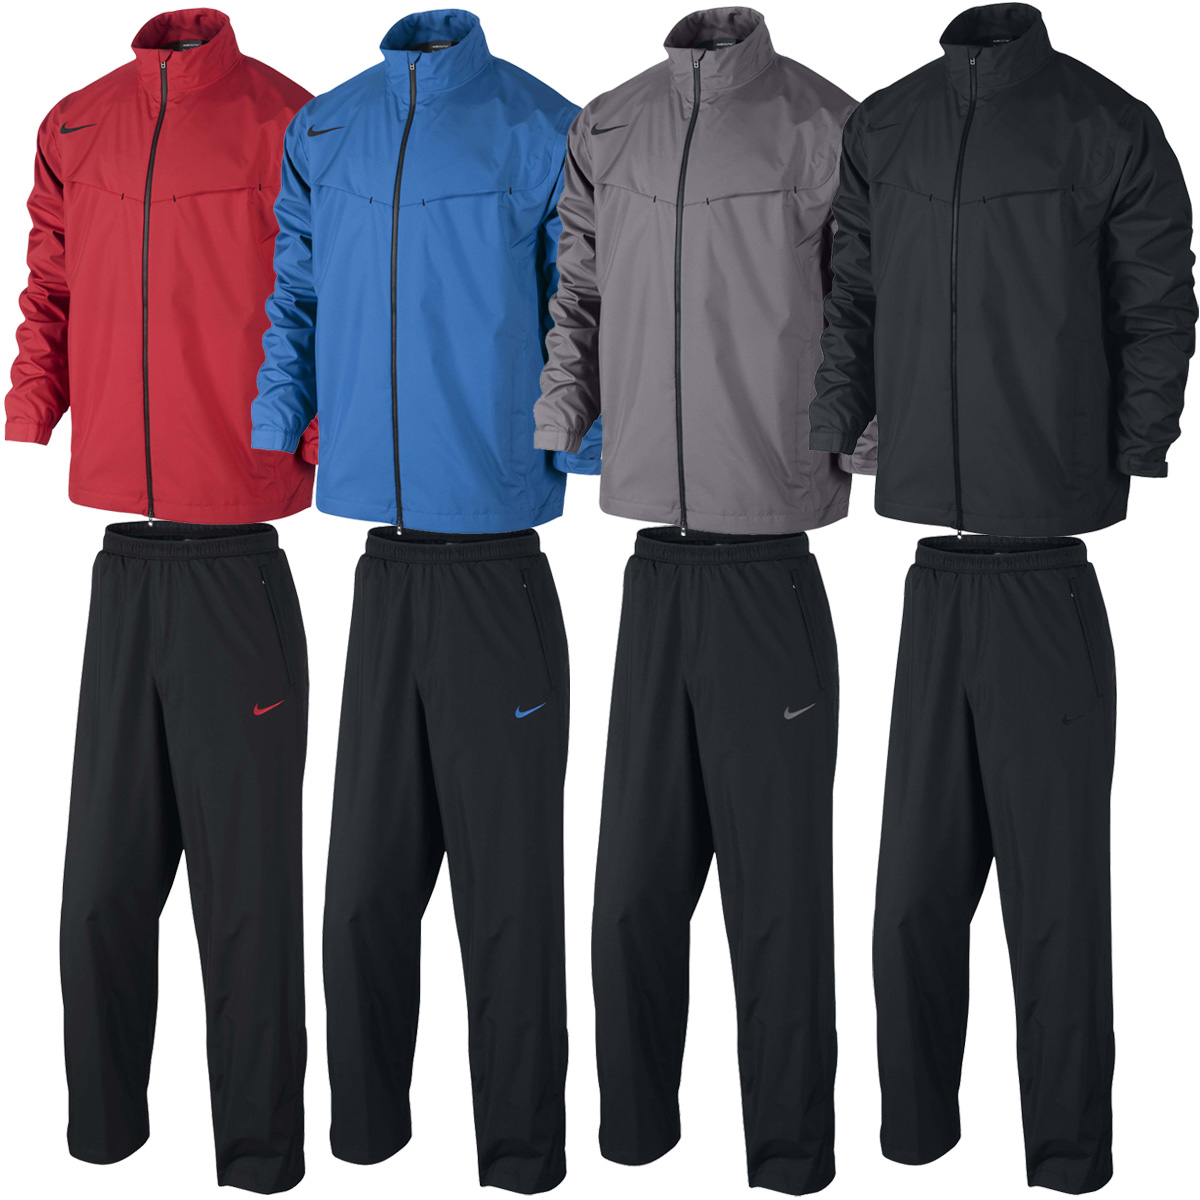 Nike Storm Fit Rain Suit | lupon.gov.ph